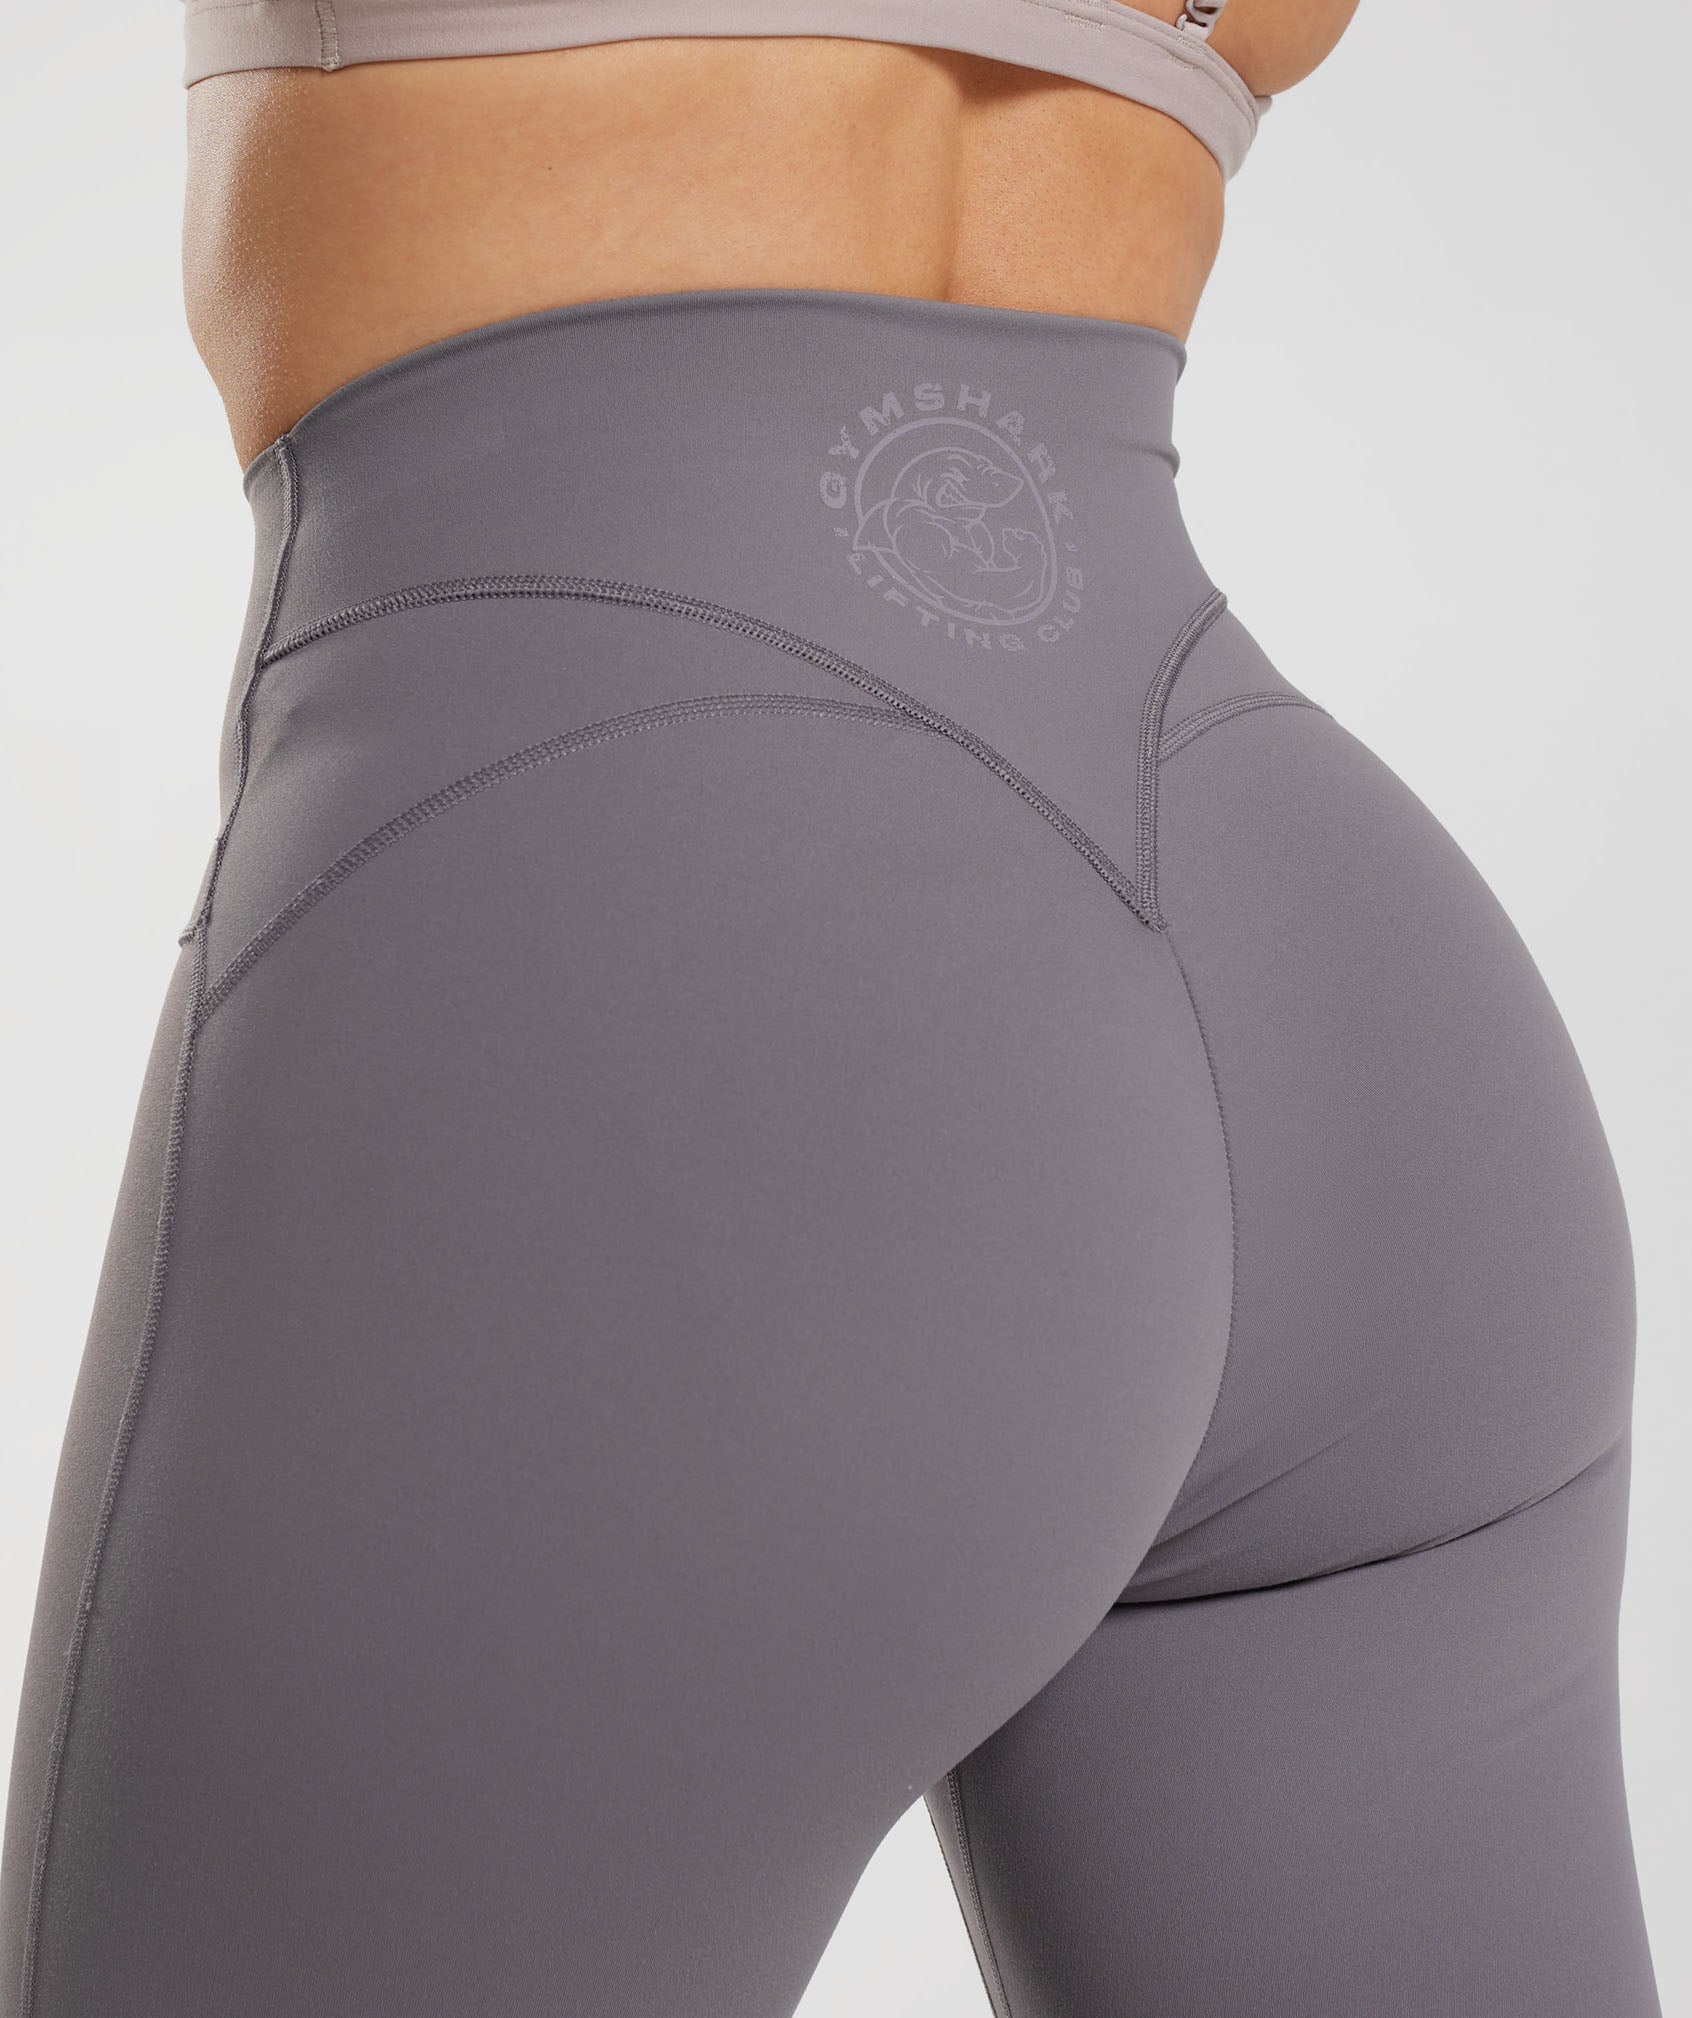 Gymshark women's Aspire Leggings heathered Grey W/ Pockets tights Lg